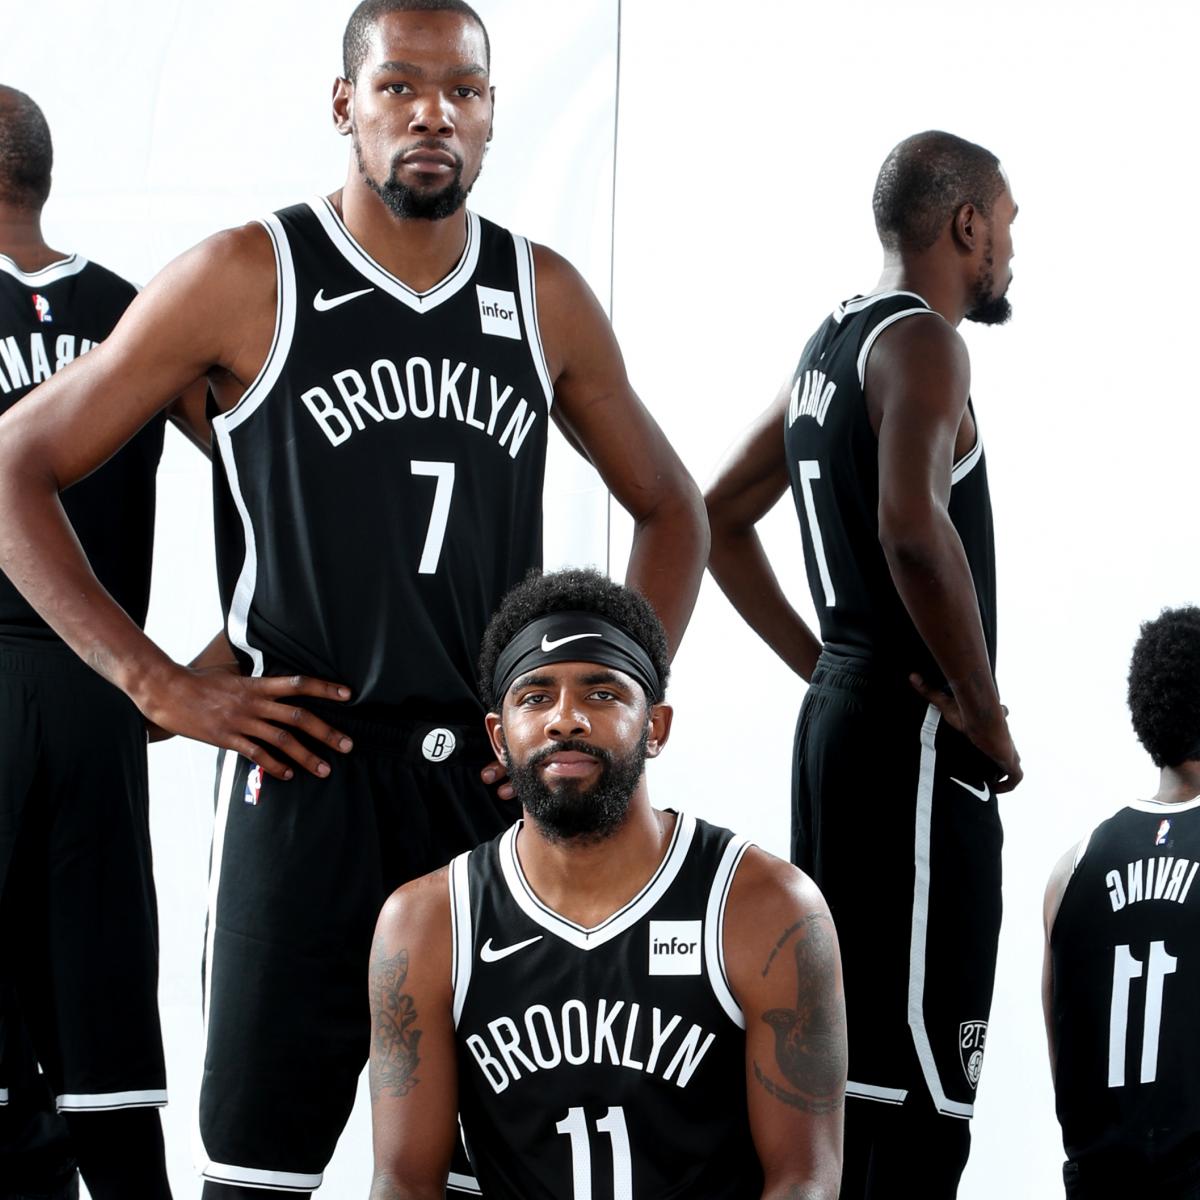 Brooklyn-bound -- KD, Kyrie announce Nets moves - ESPN